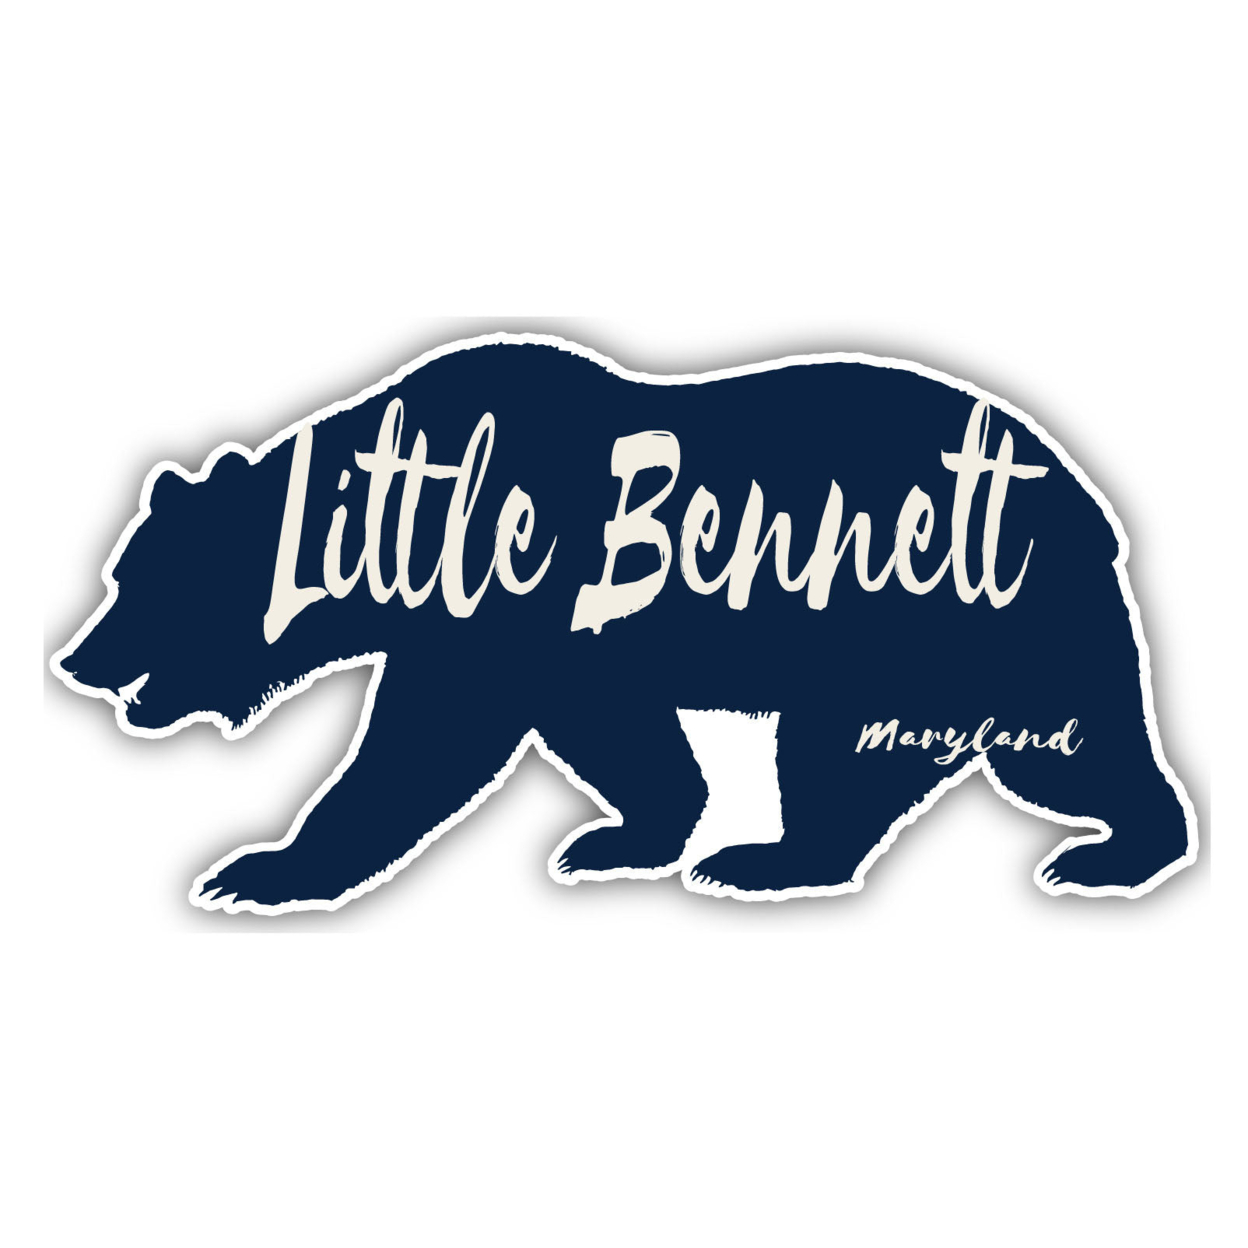 Little Bennett Maryland Souvenir Decorative Stickers (Choose Theme And Size) - 4-Inch, Bear